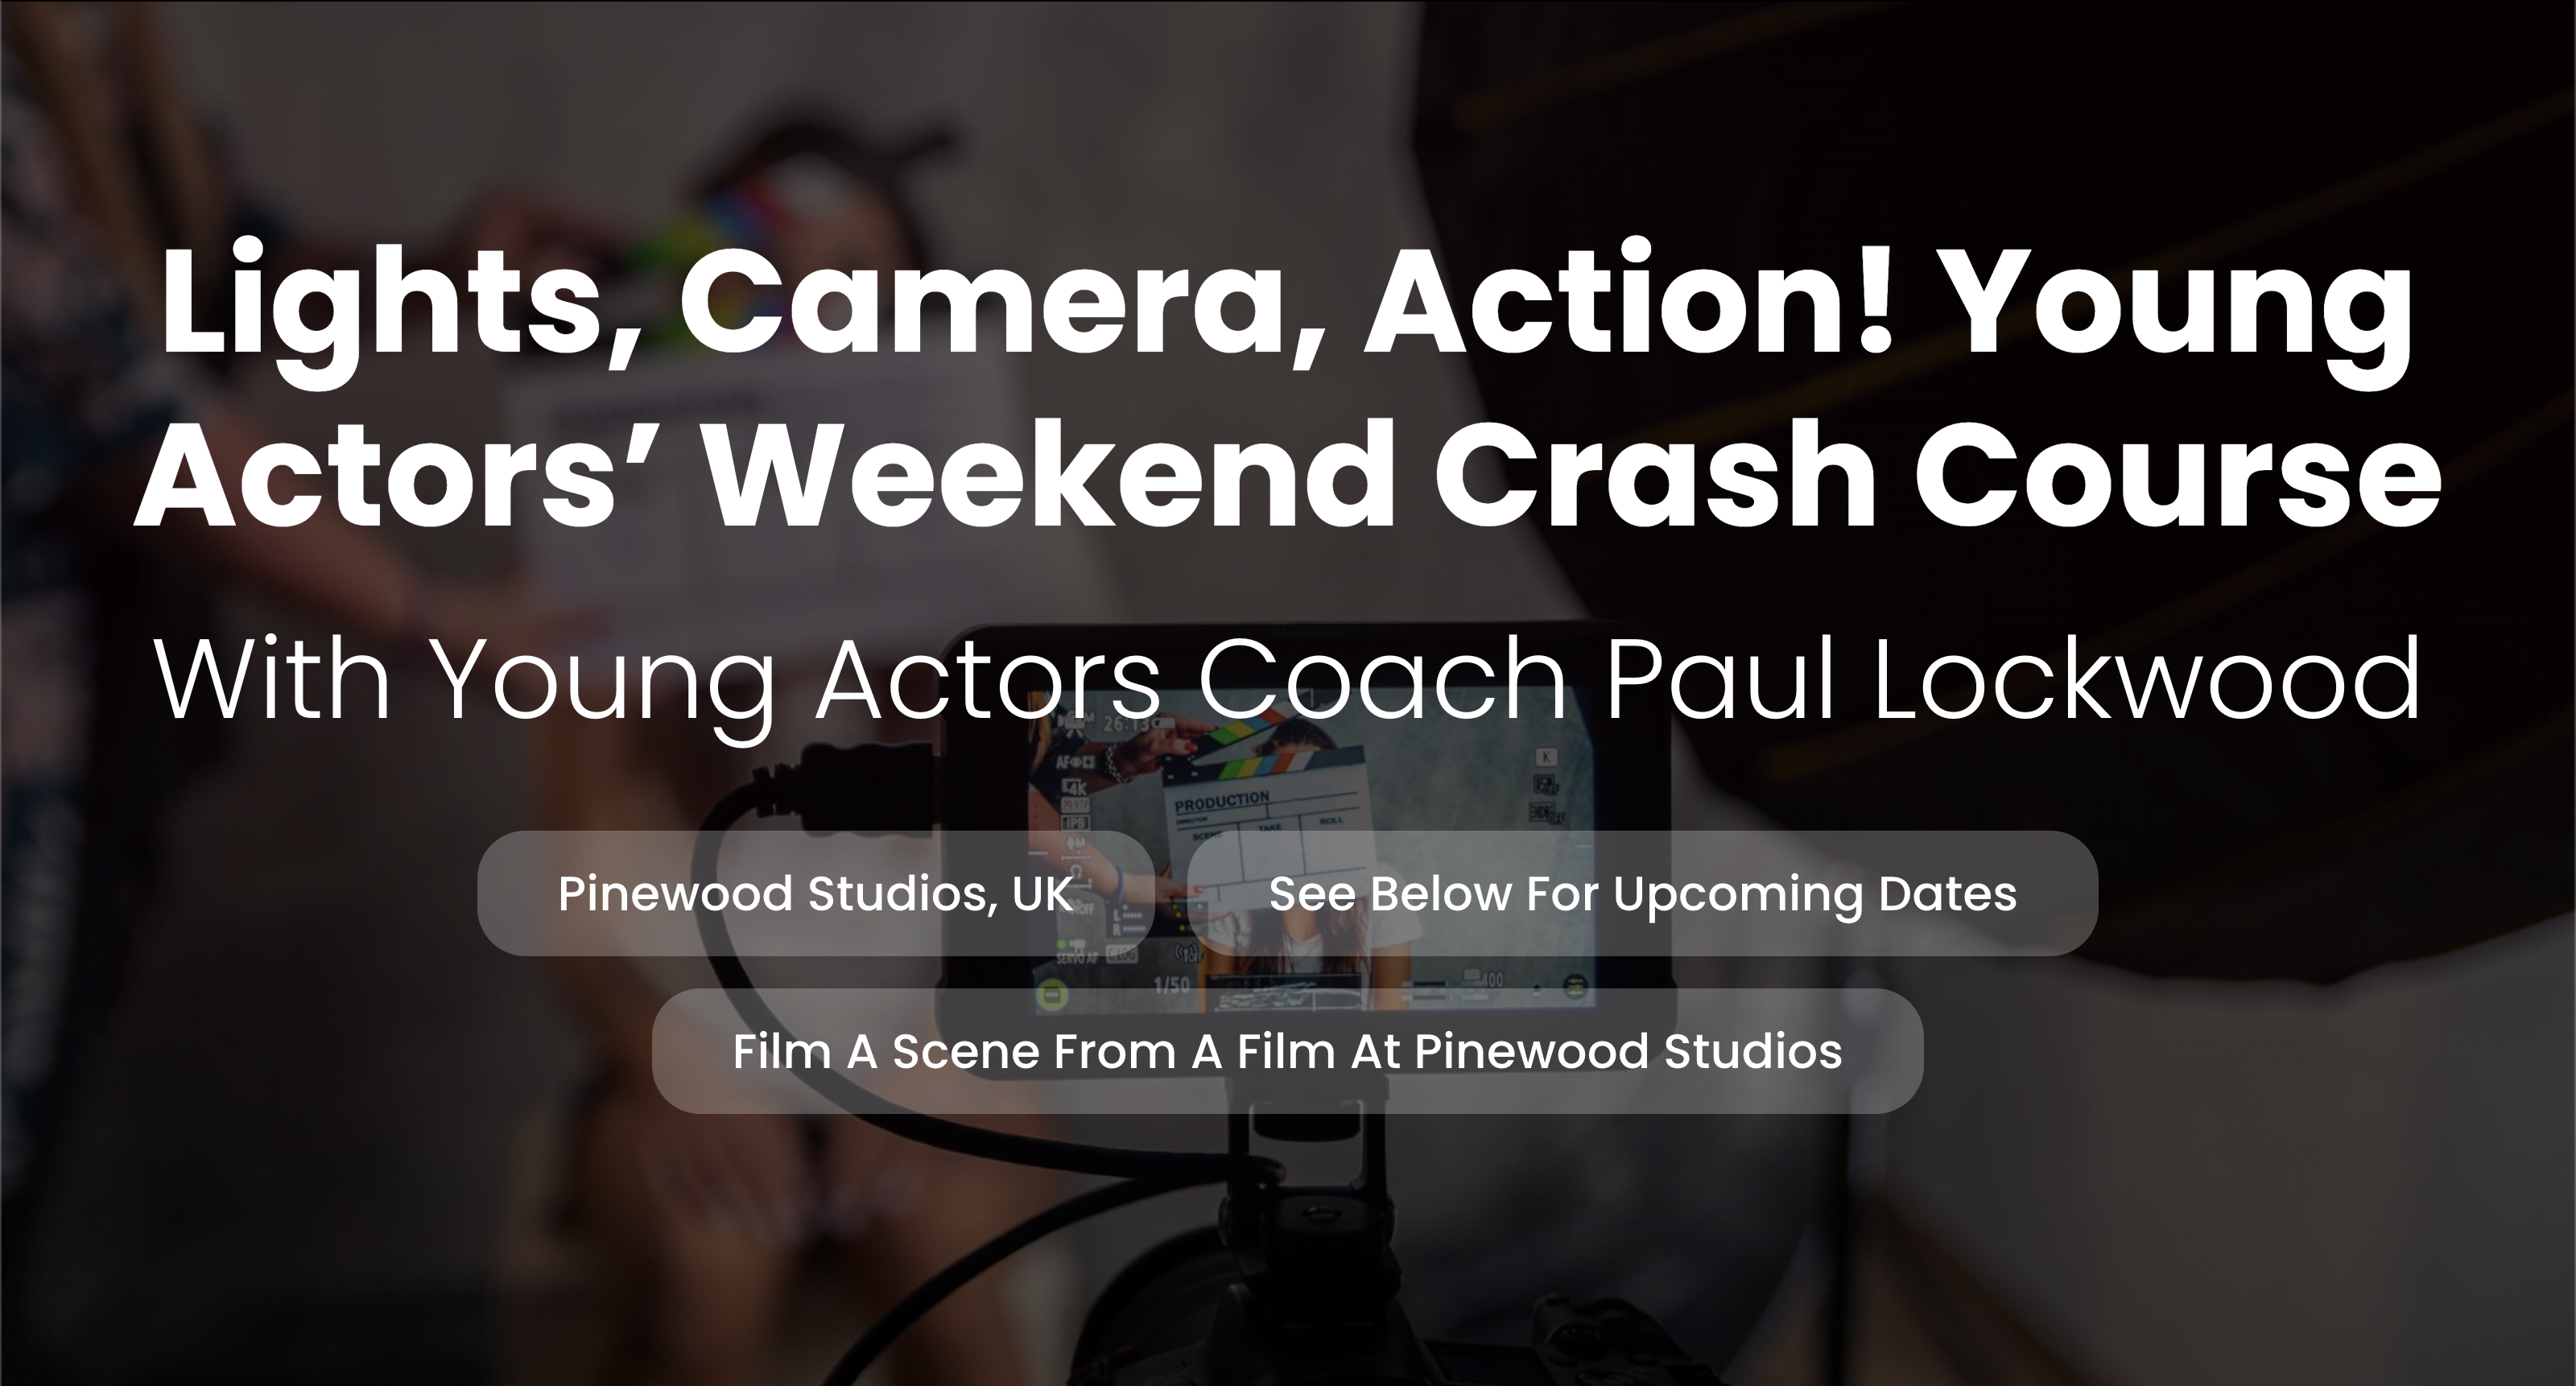 Lights, Camera, Action! Young Actors’ Weekend Crash Course